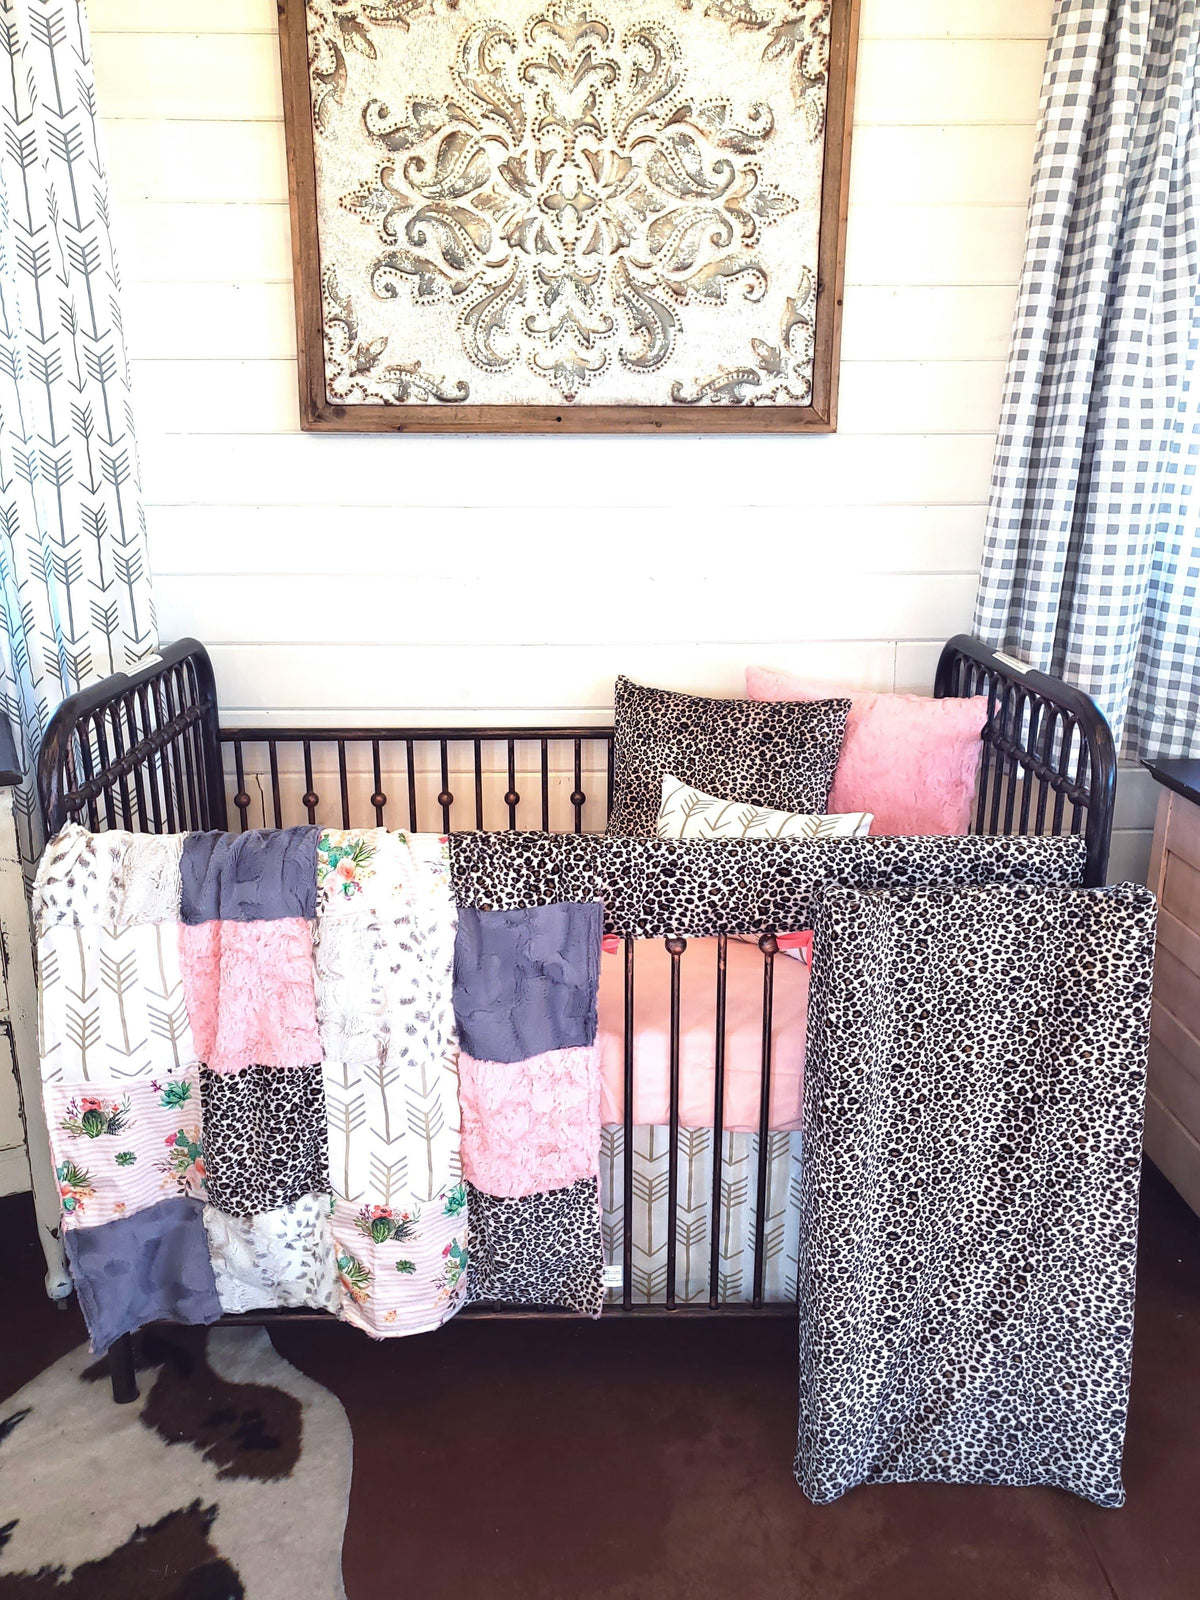 Custom Girl Crib Bedding - Cactus Stripe and Cheetah Baby Bedding Nursery Collection - DBC Baby Bedding Co 